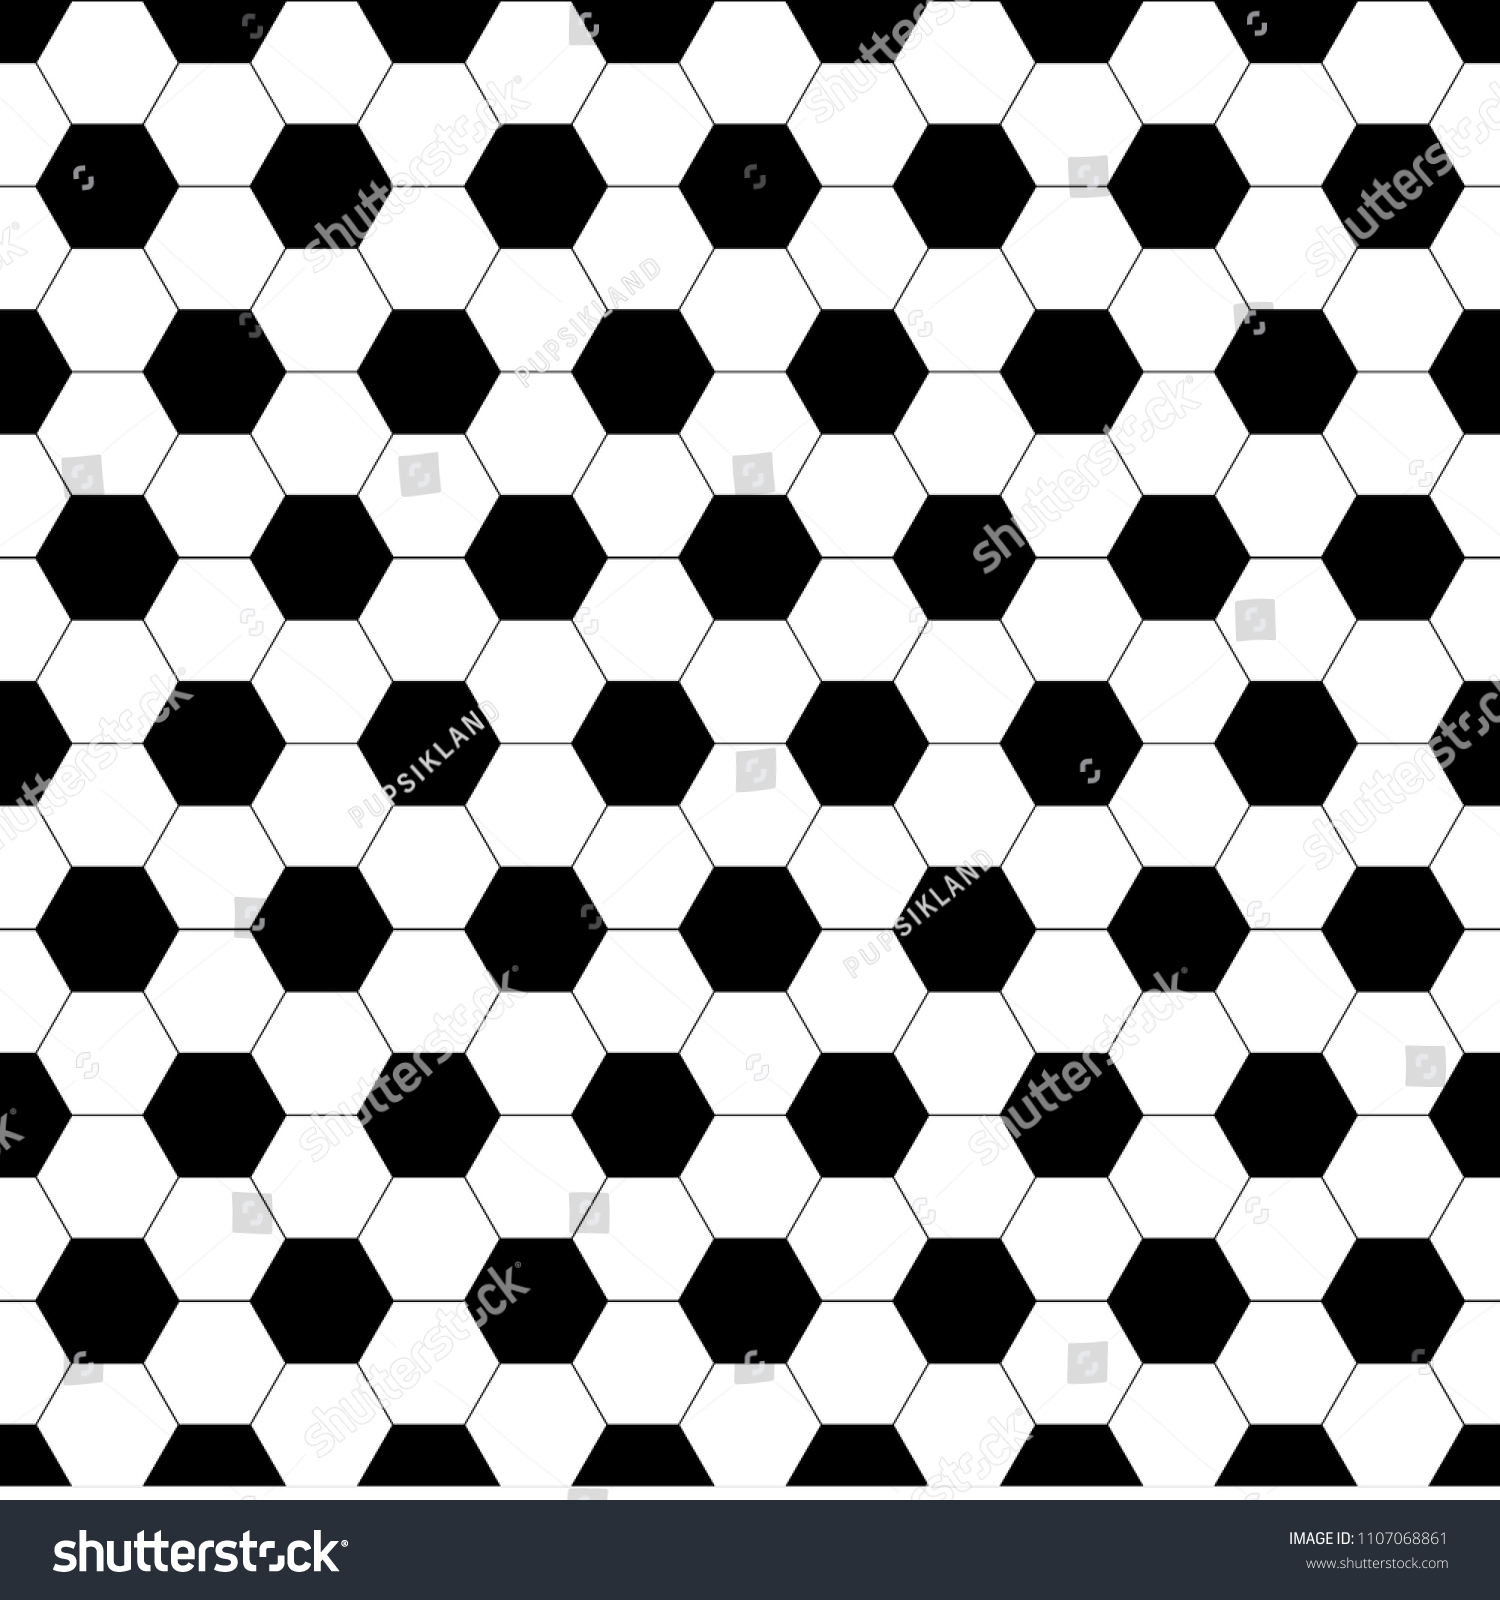 Hexagonal Black and White pattern